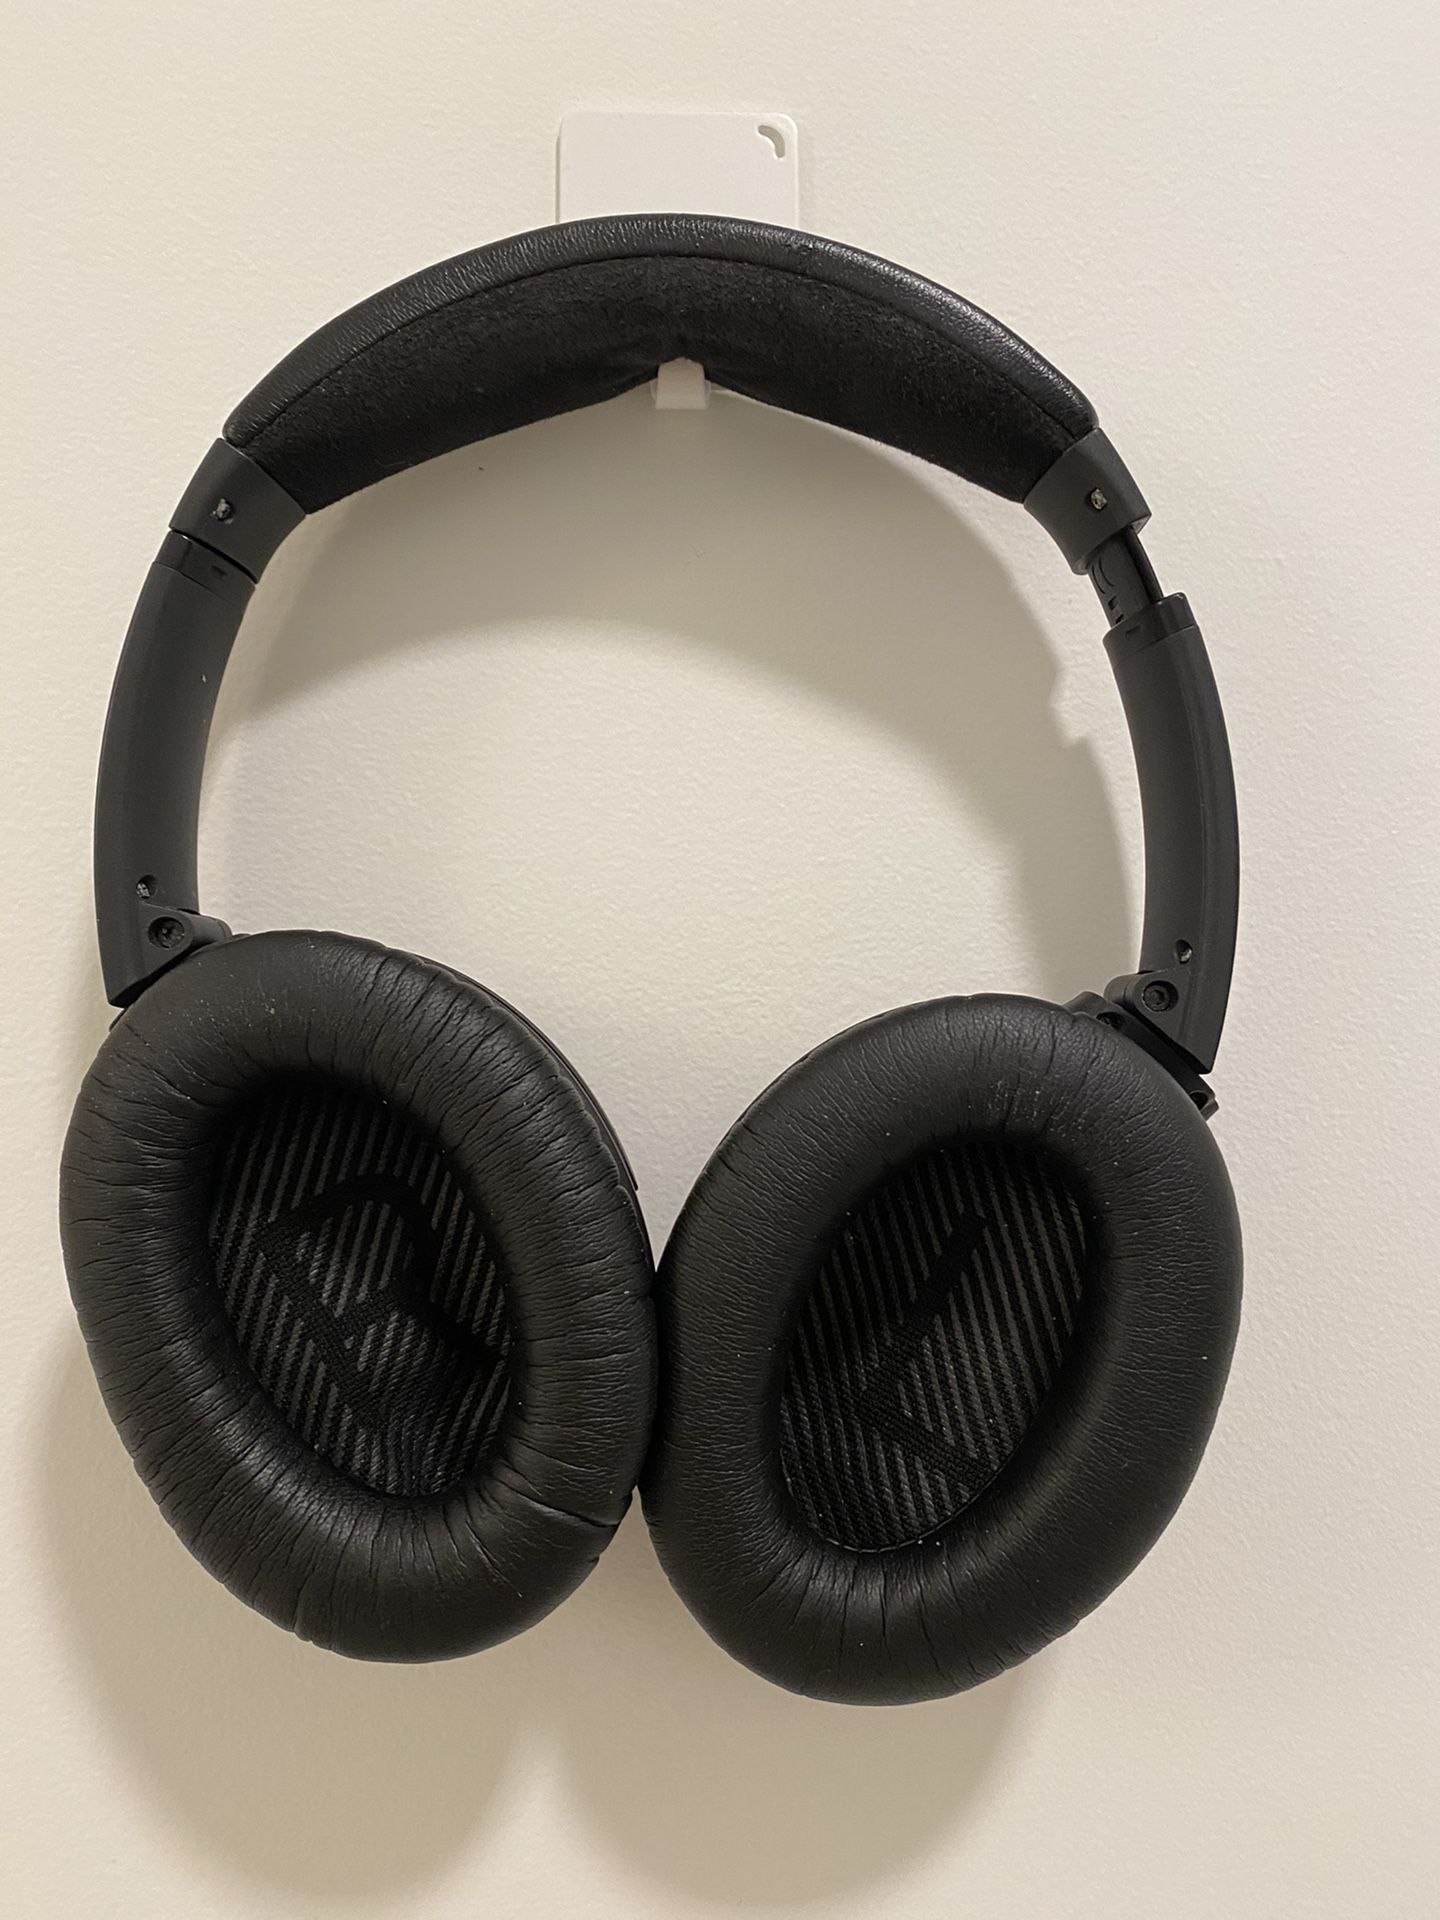 Bose Q35 II wireless noise cancelling headphones